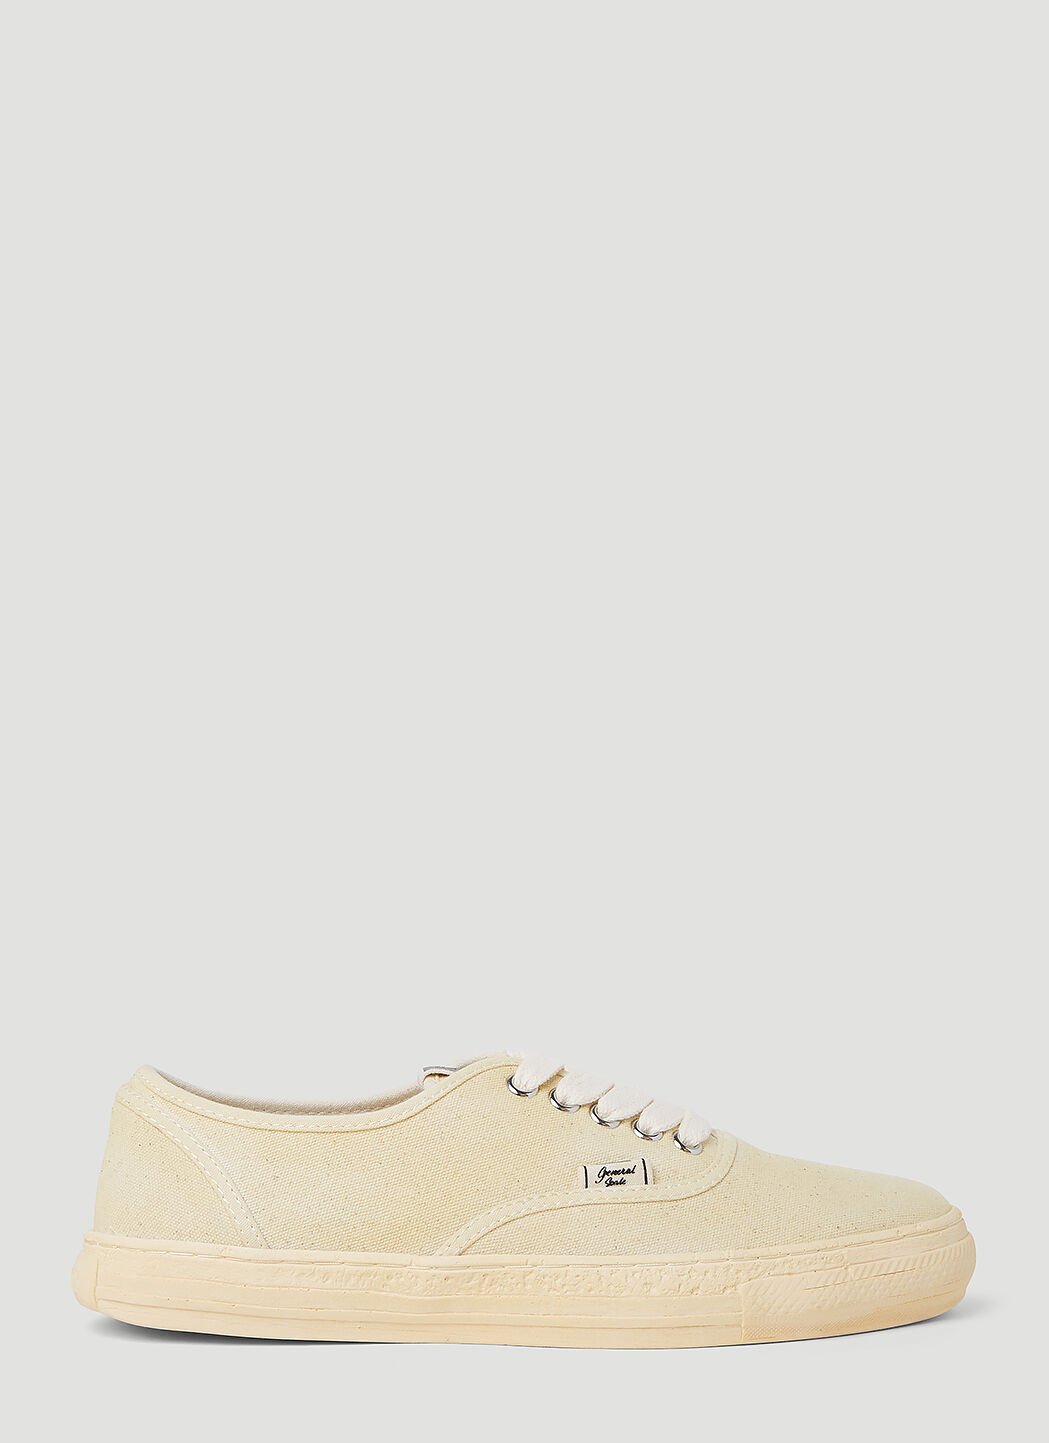 Salomon Past Sole 5 Low Top Sneakers Yellow sal0354013